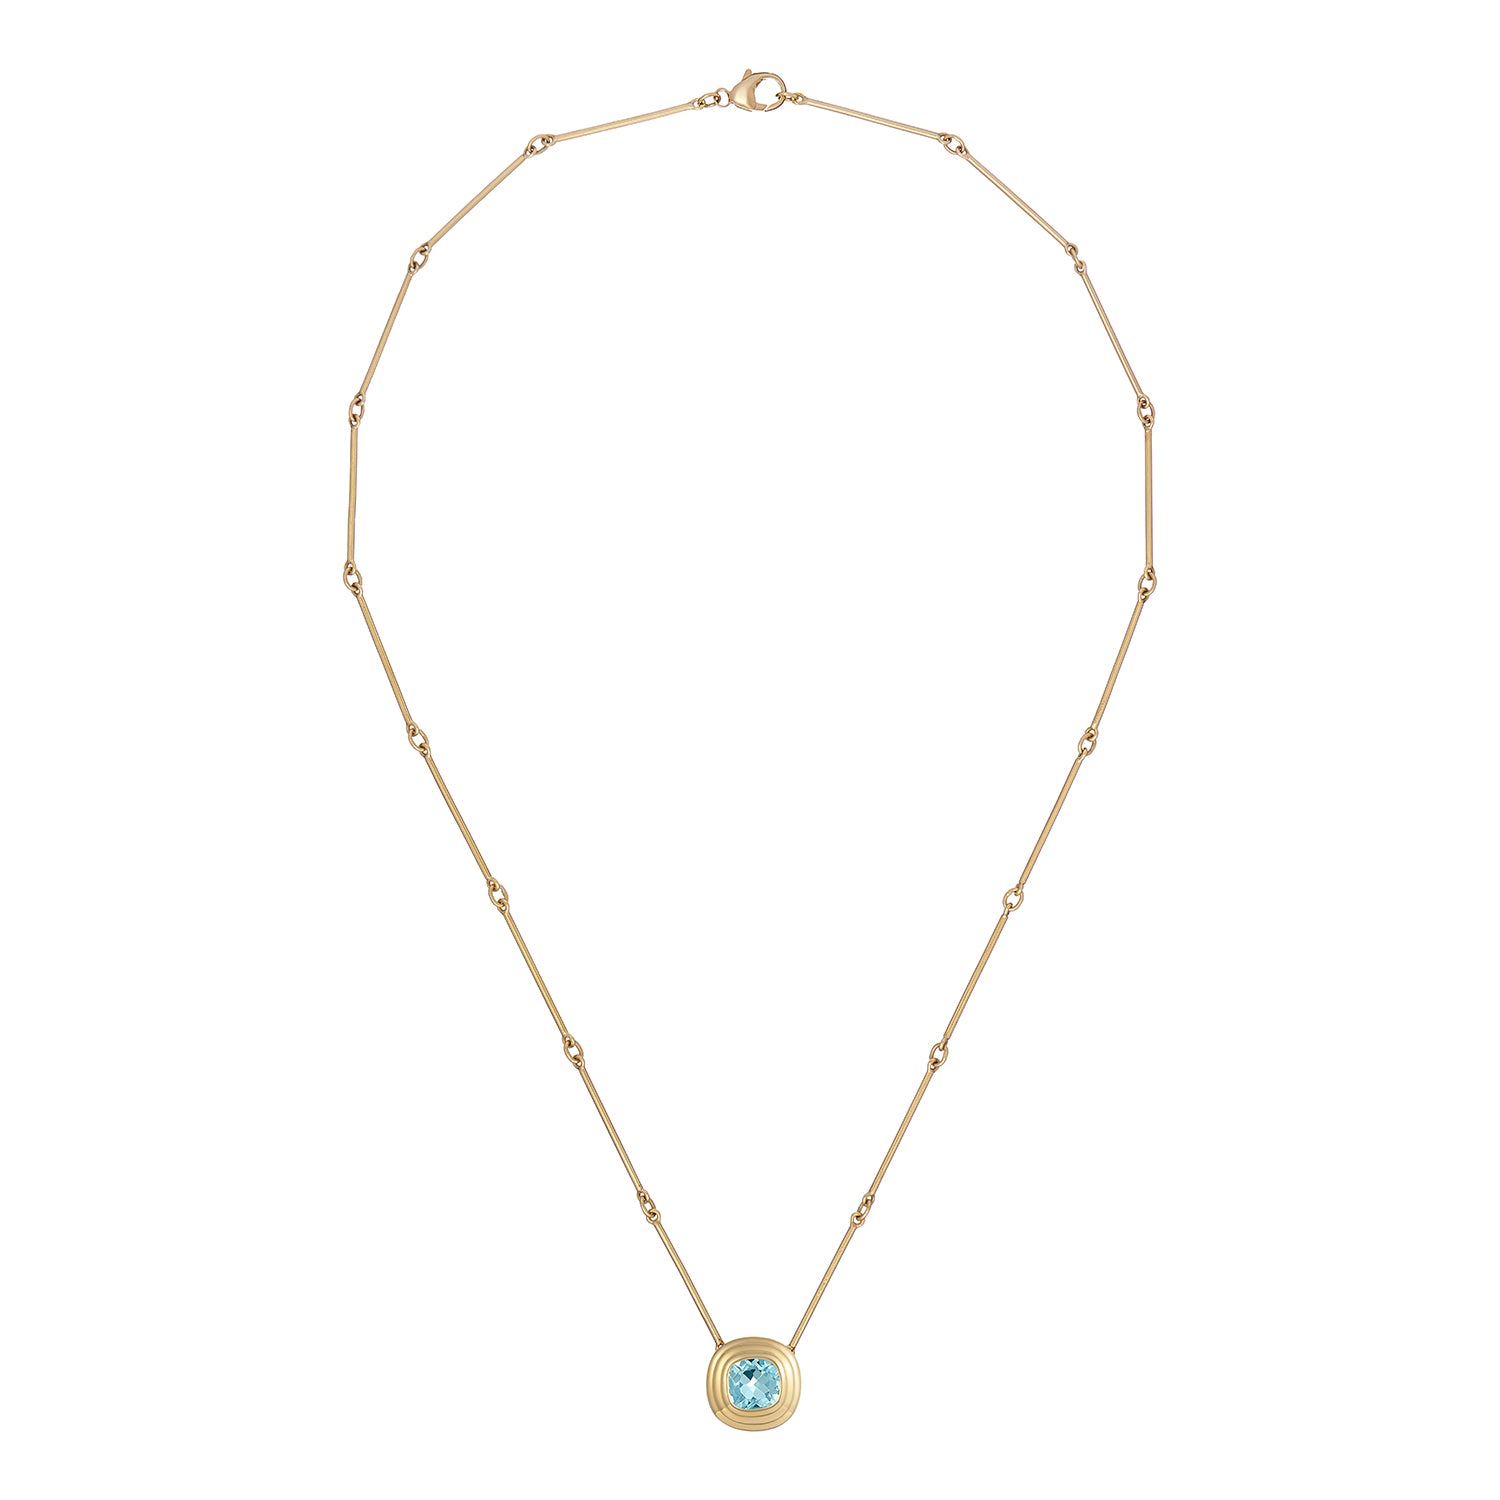 Athena: Small Sky Blue Topaz Necklace - Minka Jewels